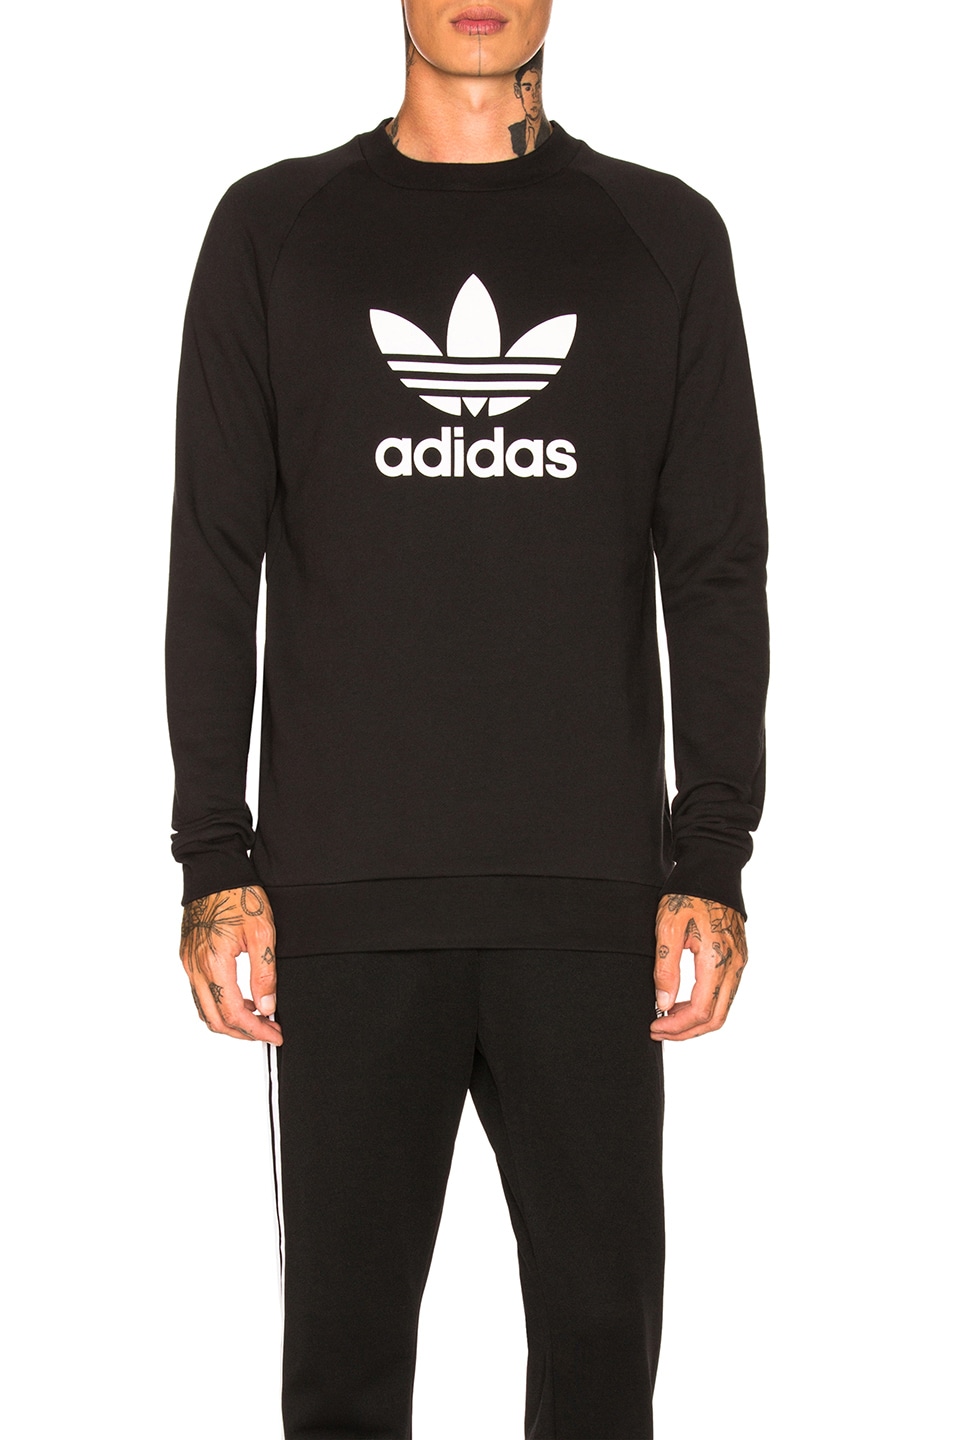 Image 1 of adidas Originals Trefoil Warm Up Crew Sweatshirt in Black